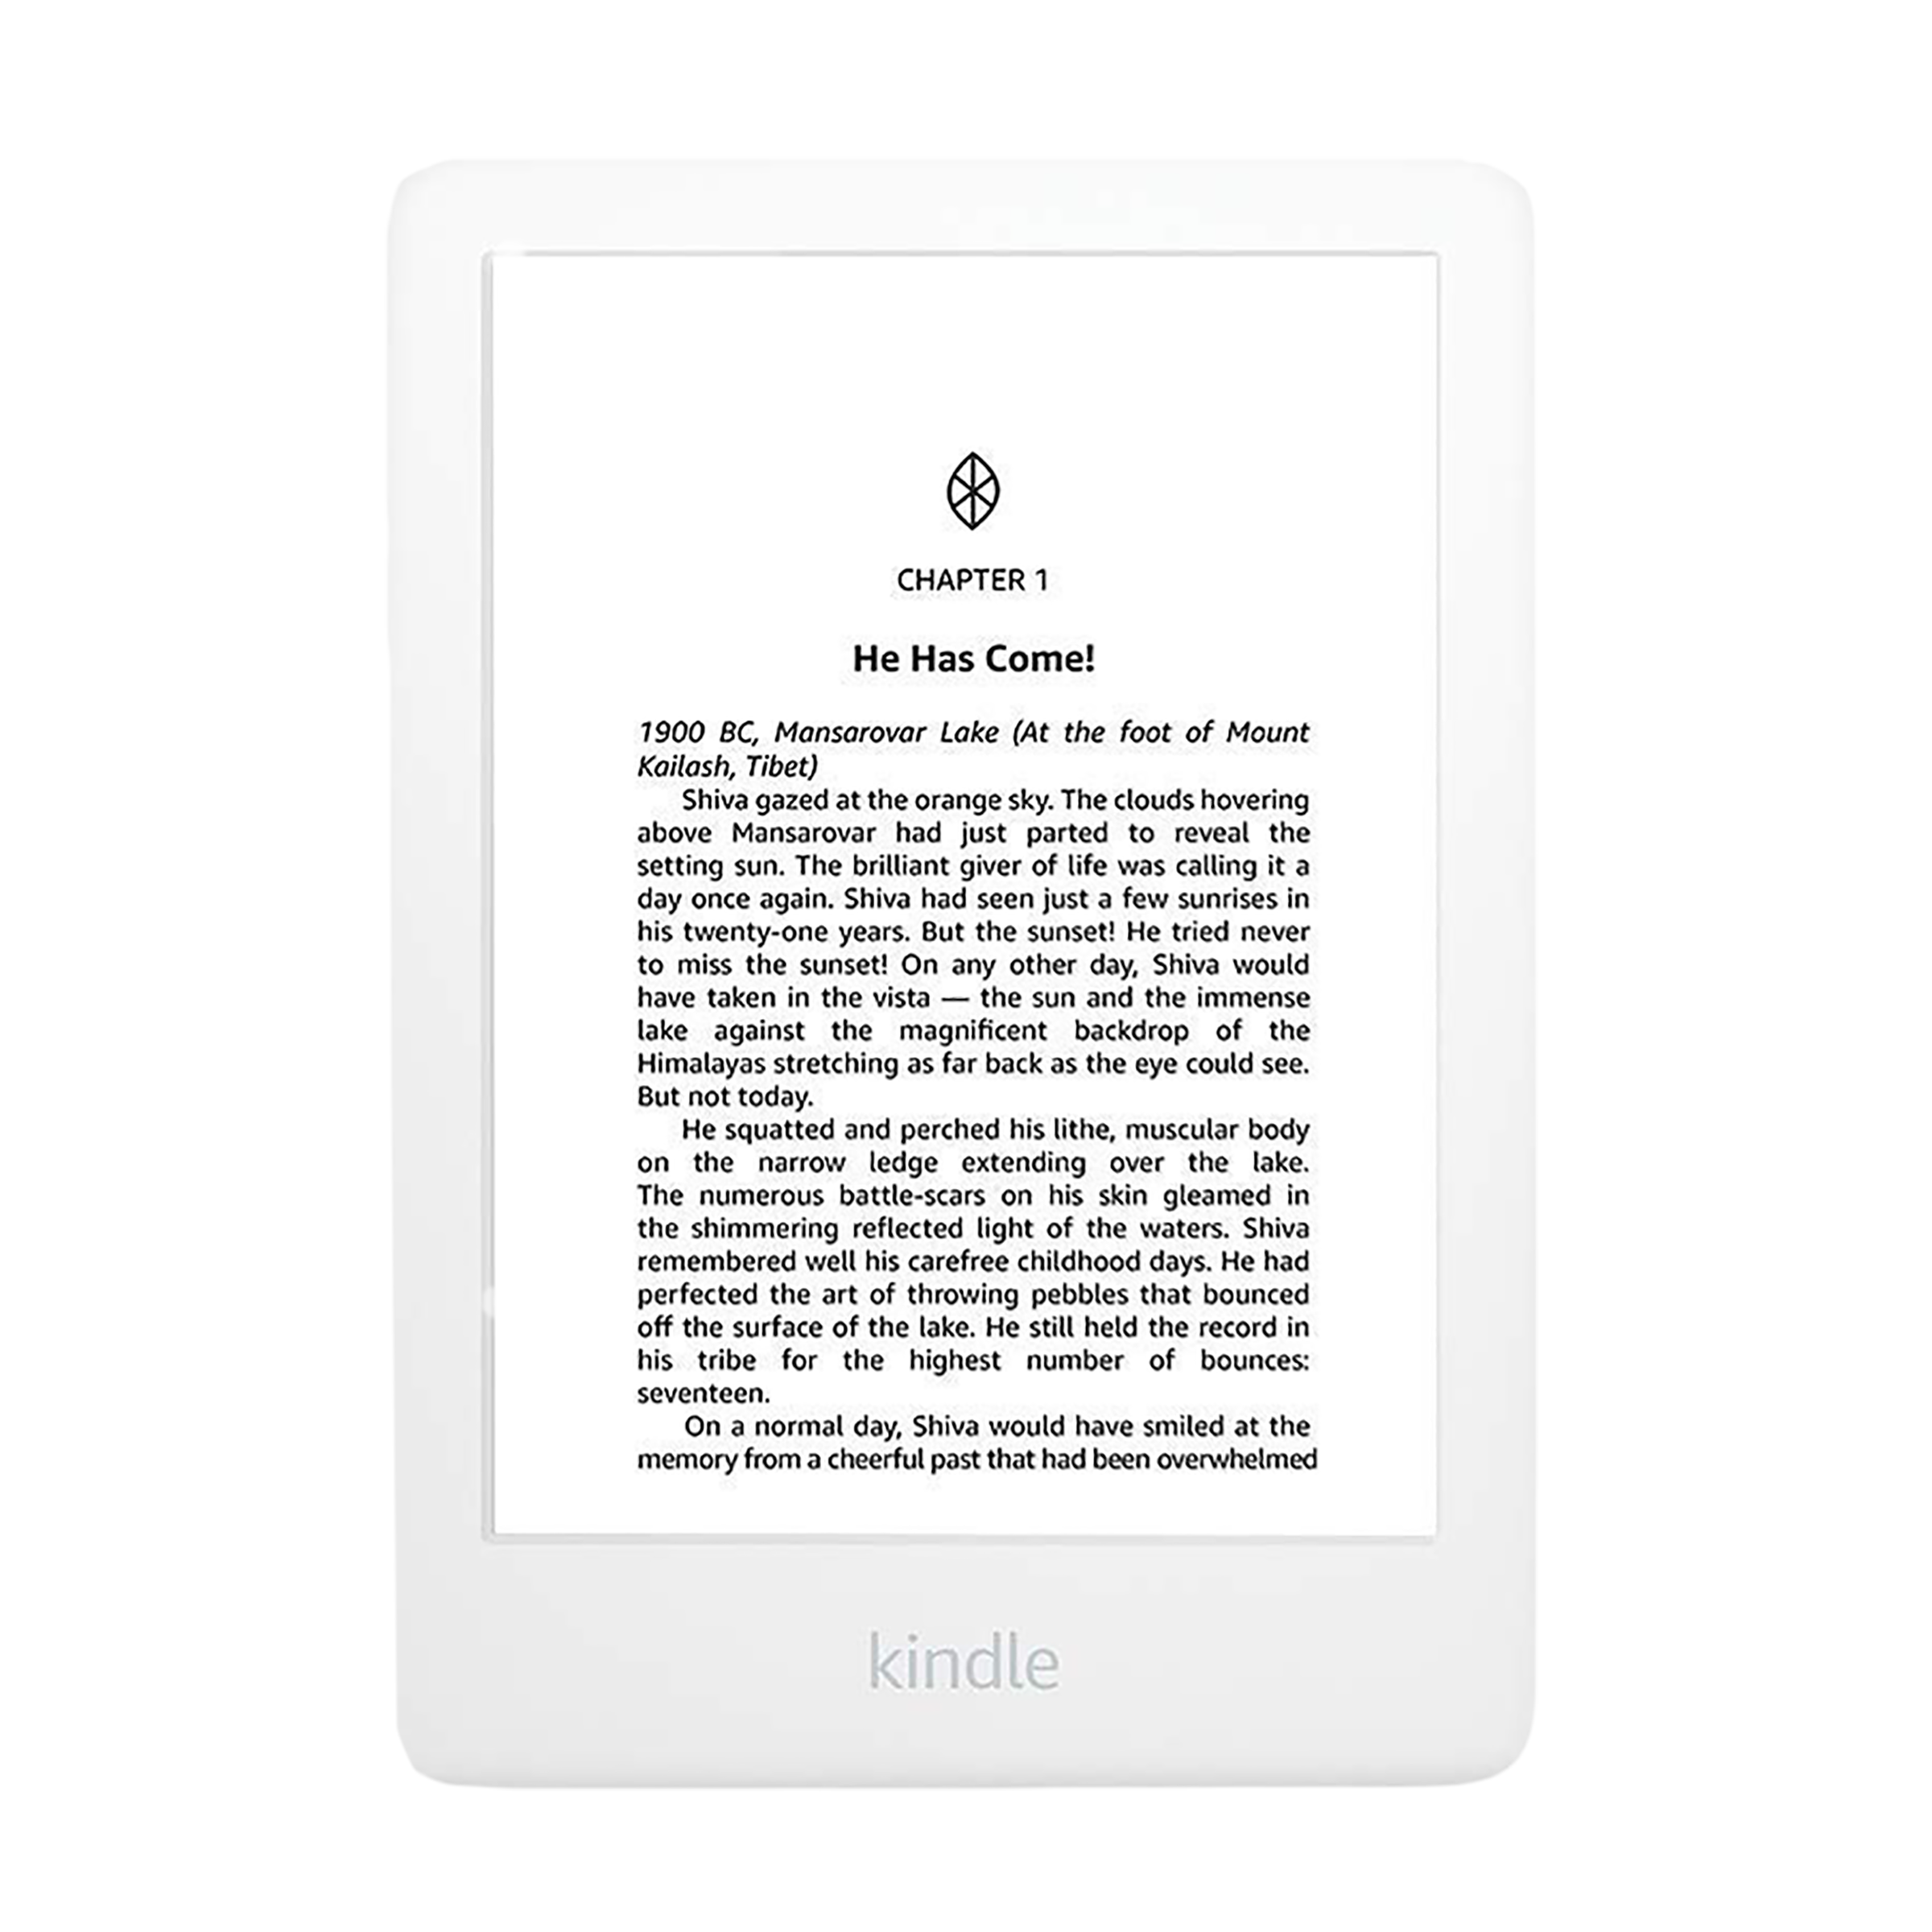 Buy  Paperwhite Signature Edition Wi-Fi (7 Inch, 32GB, Black) Online  – Croma